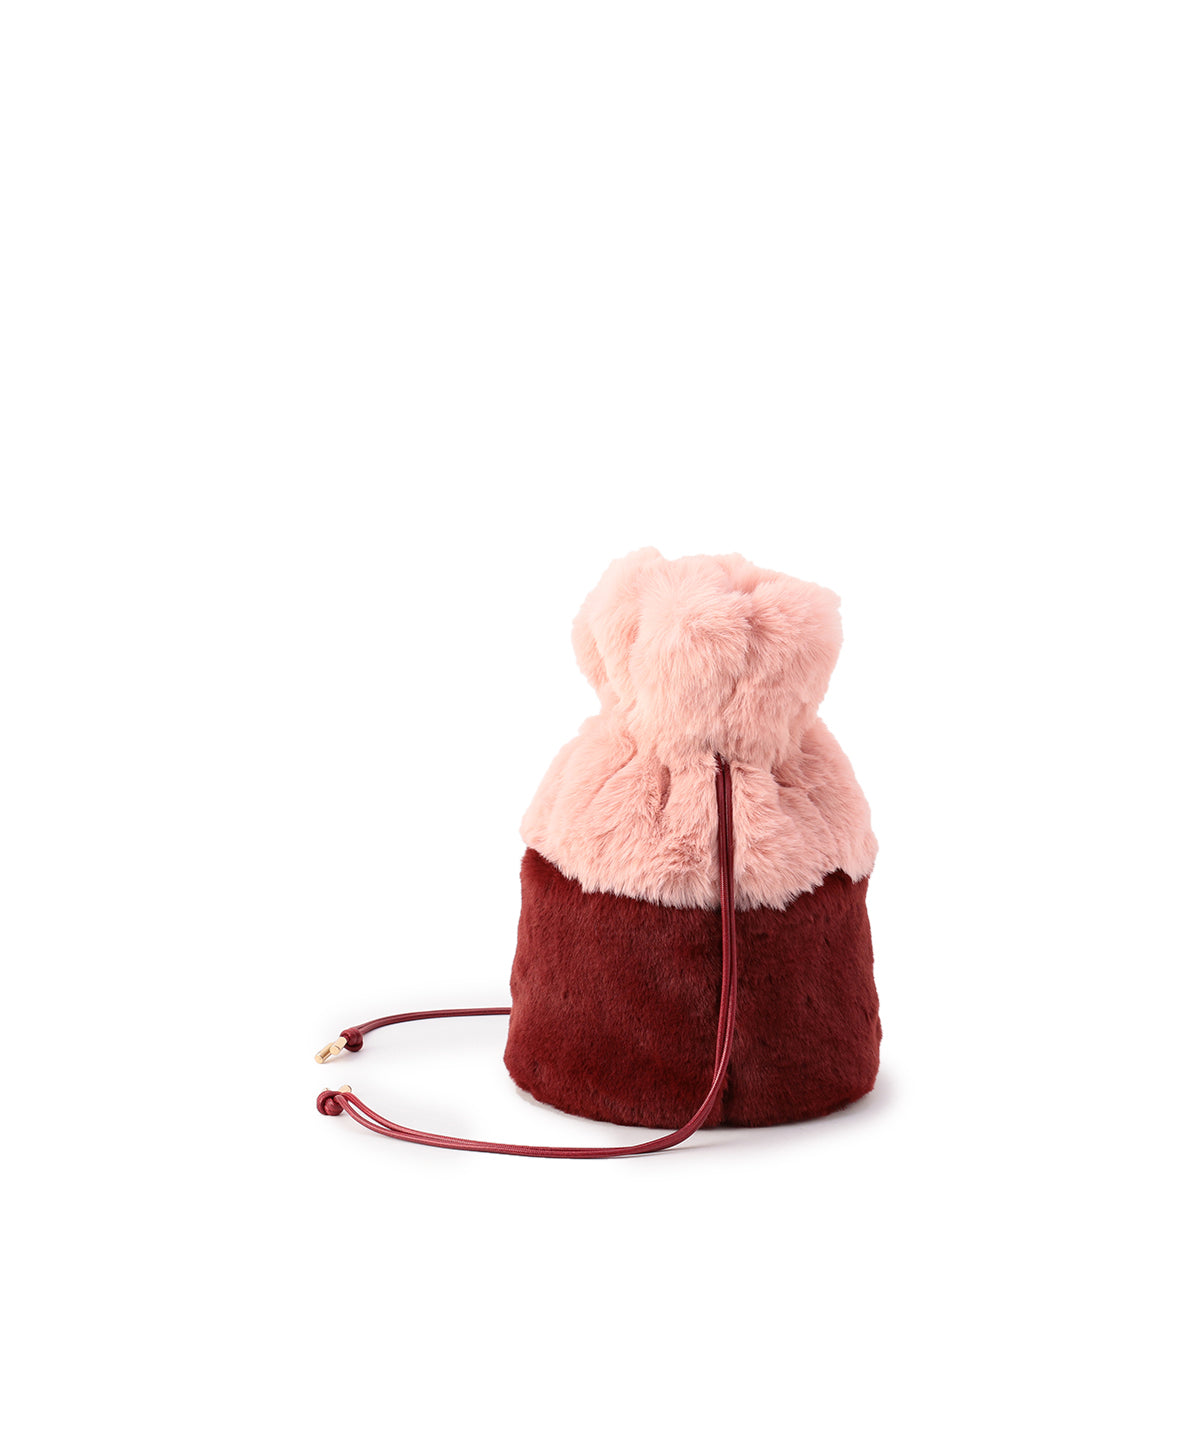 Eco Fur Drawstring Bag(Small)PINK×BURGUNDY